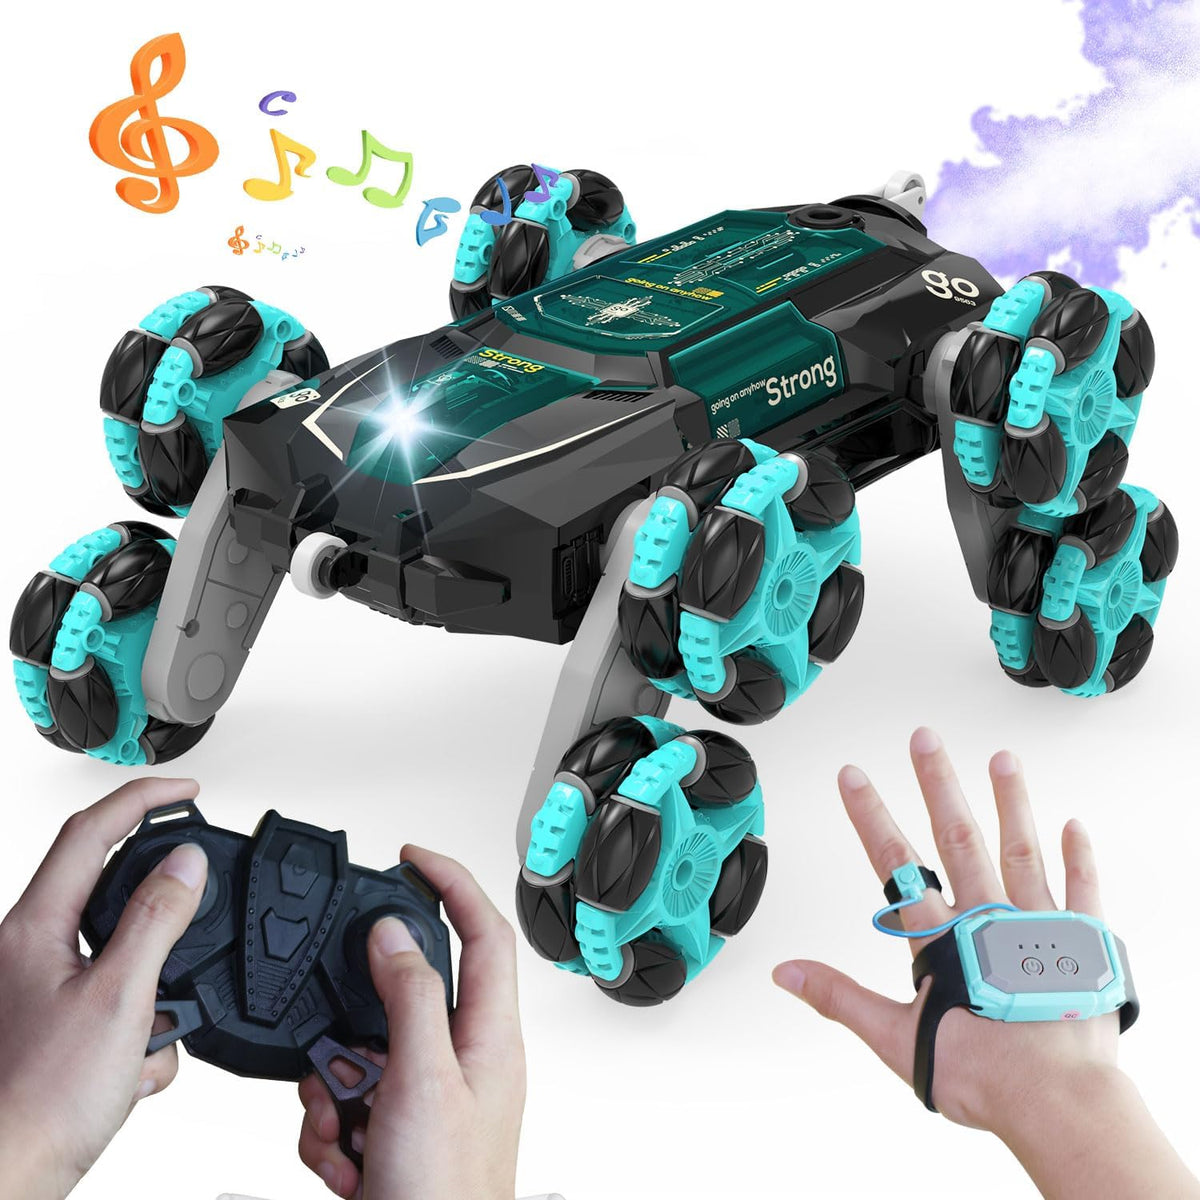 8Wd Gesture Sensing Rc Car Toys for Boy Age 8-13,2.4Ghz Remote Control Car,Racing Drift Double-Sided Stunt Car Cykapu